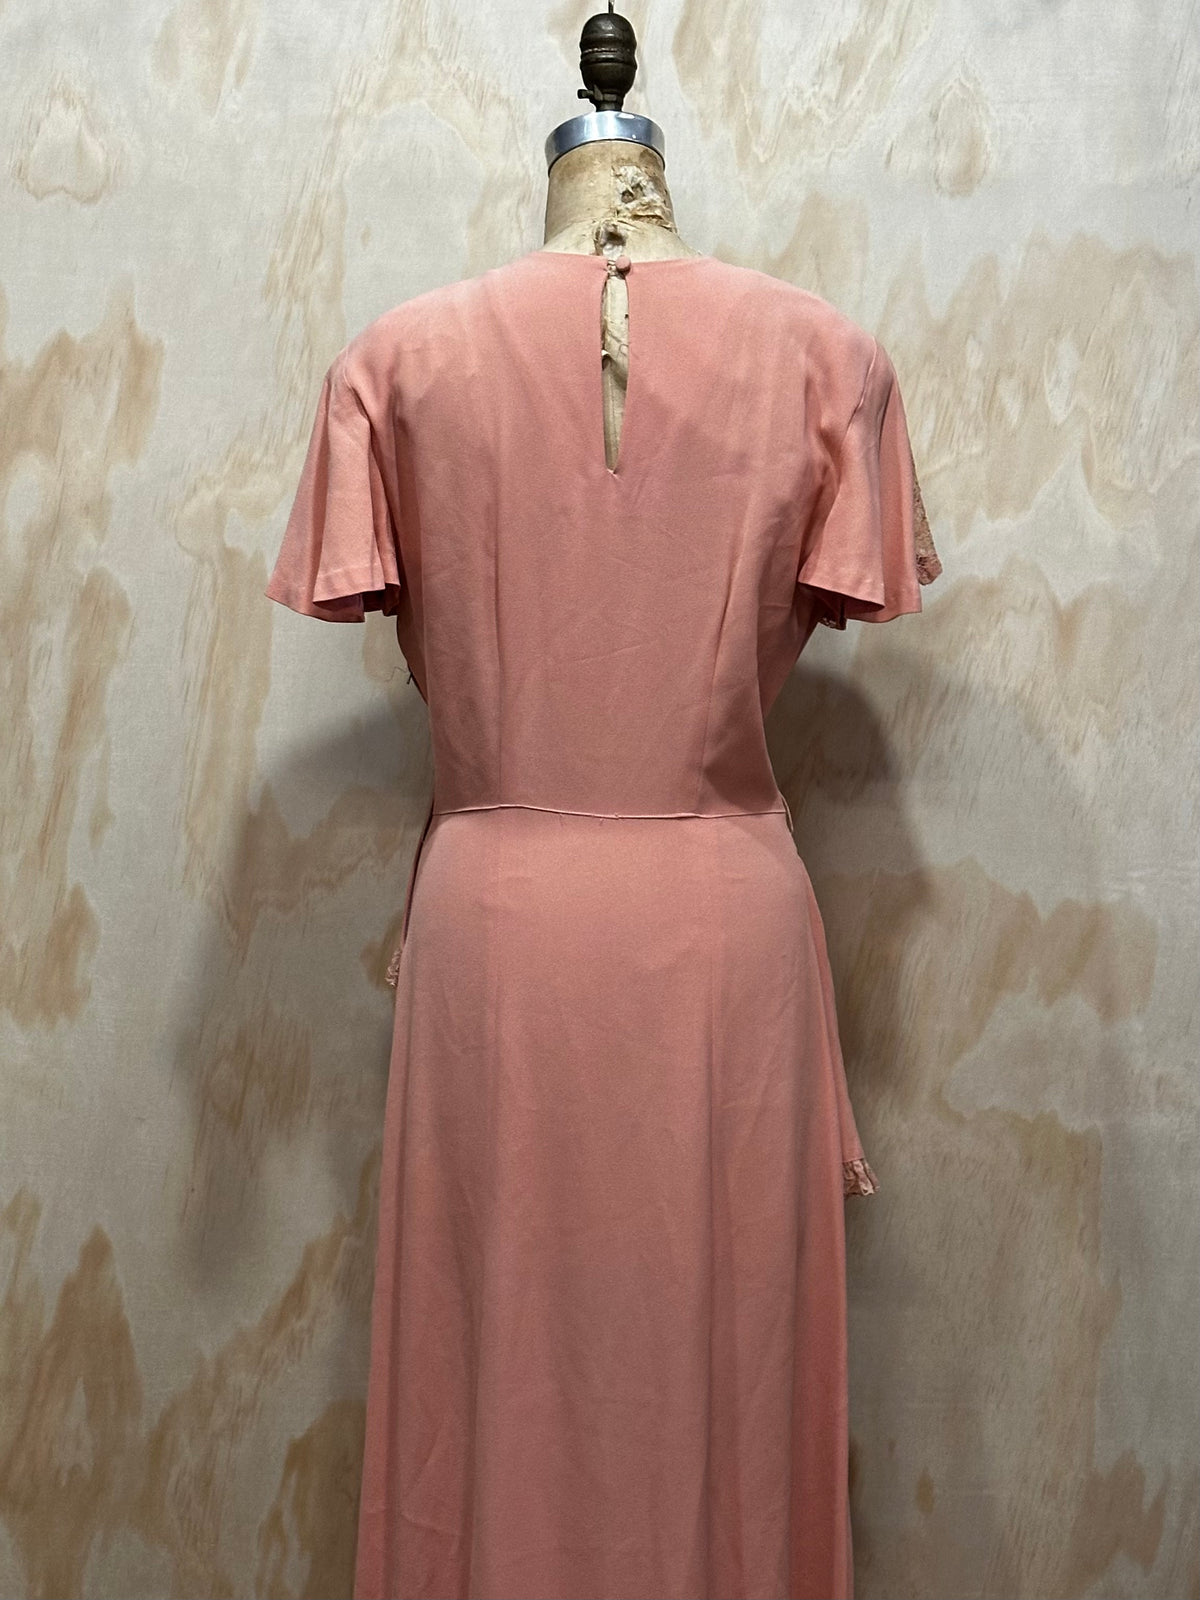 Vintage 40s Blush Pink Dress • Peplum Dress • Floor Length